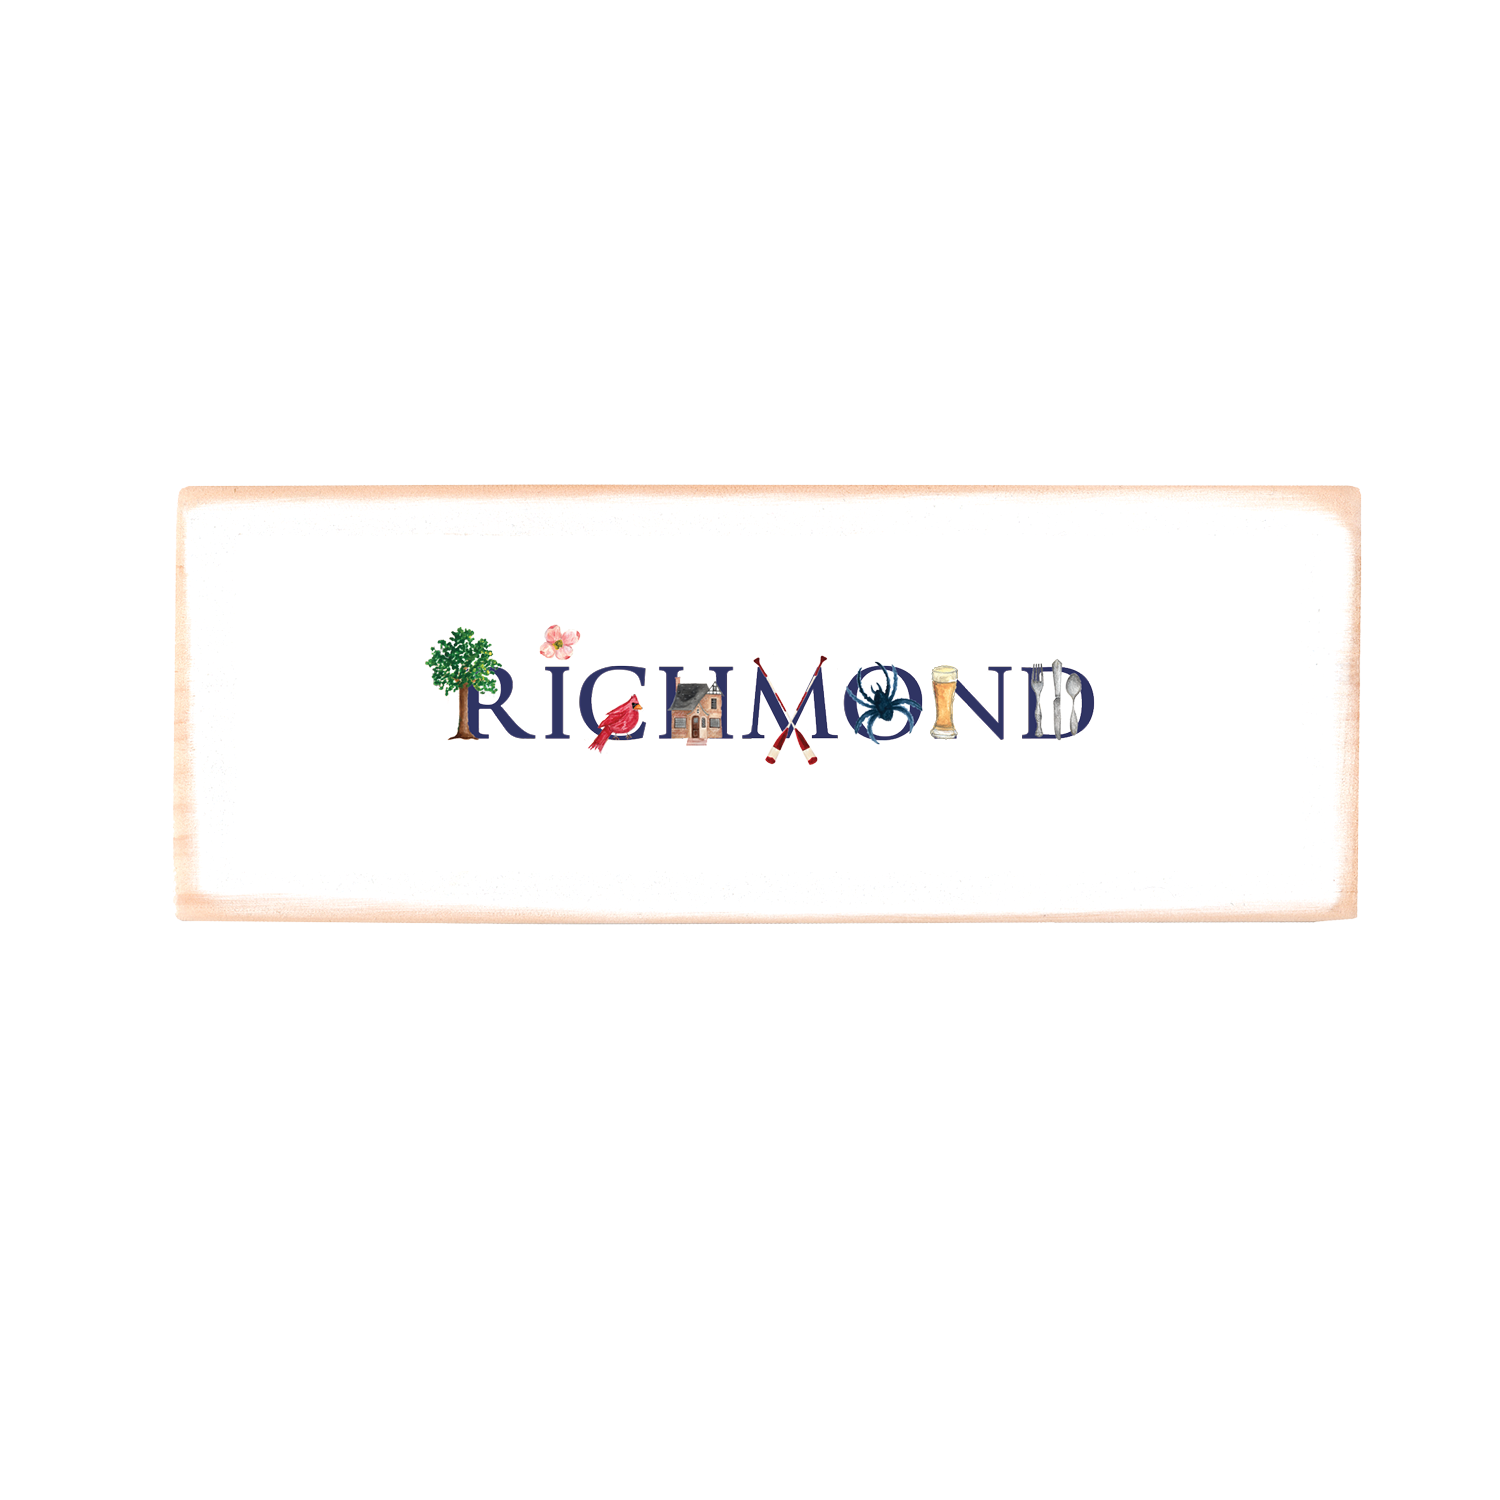 richmond, va rectangle wood block